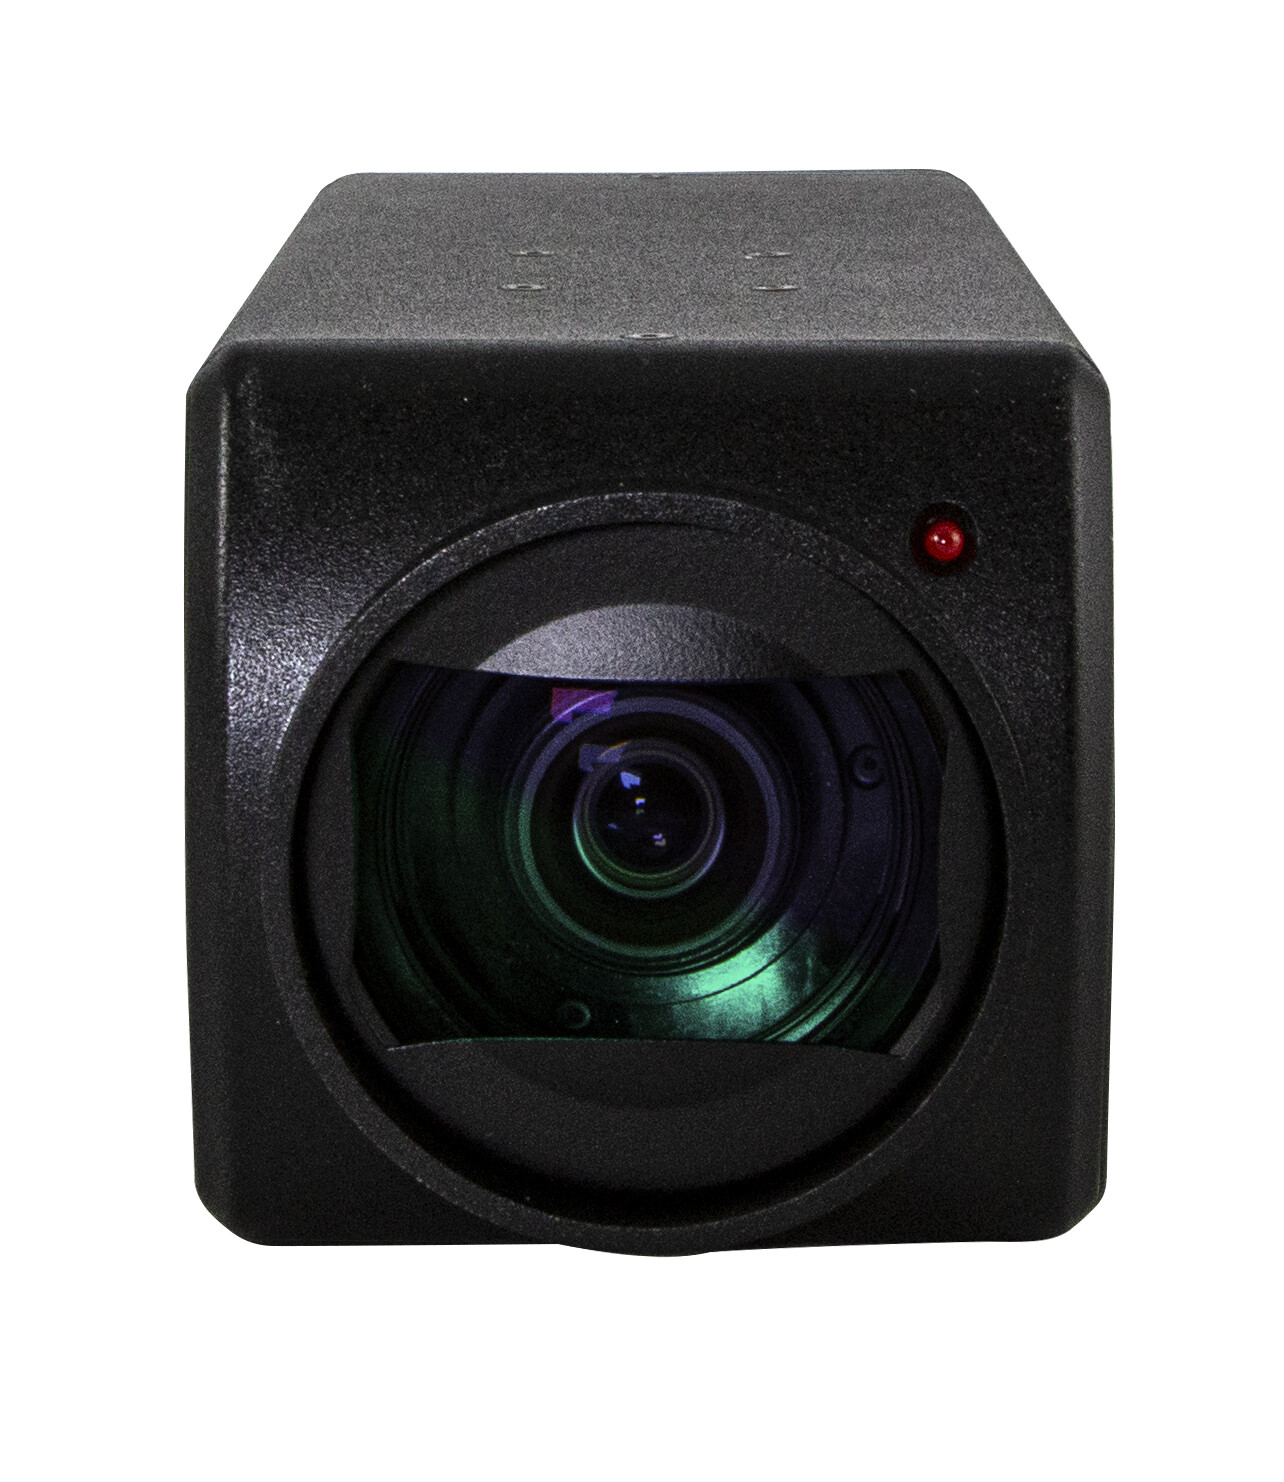 Marshall-Electronics-CV240-30X-IP-UHD-Camera